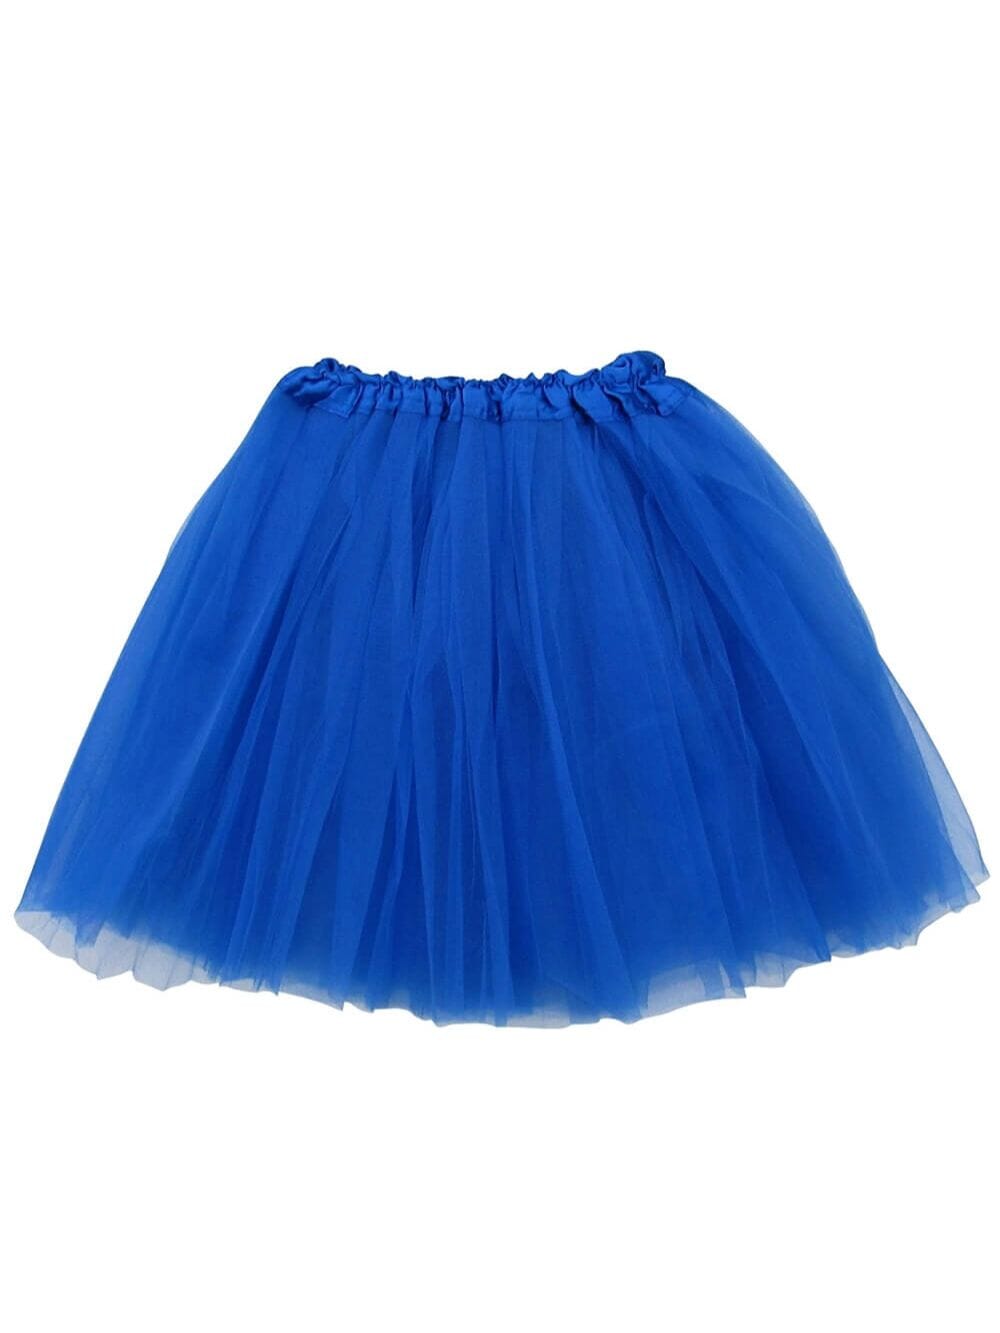 Royal Blue Plus Size Adult Tutu Skirt - Women's Plus Size 3- Layer Basic Ballet Costume Dance Tutus - Sydney So Sweet